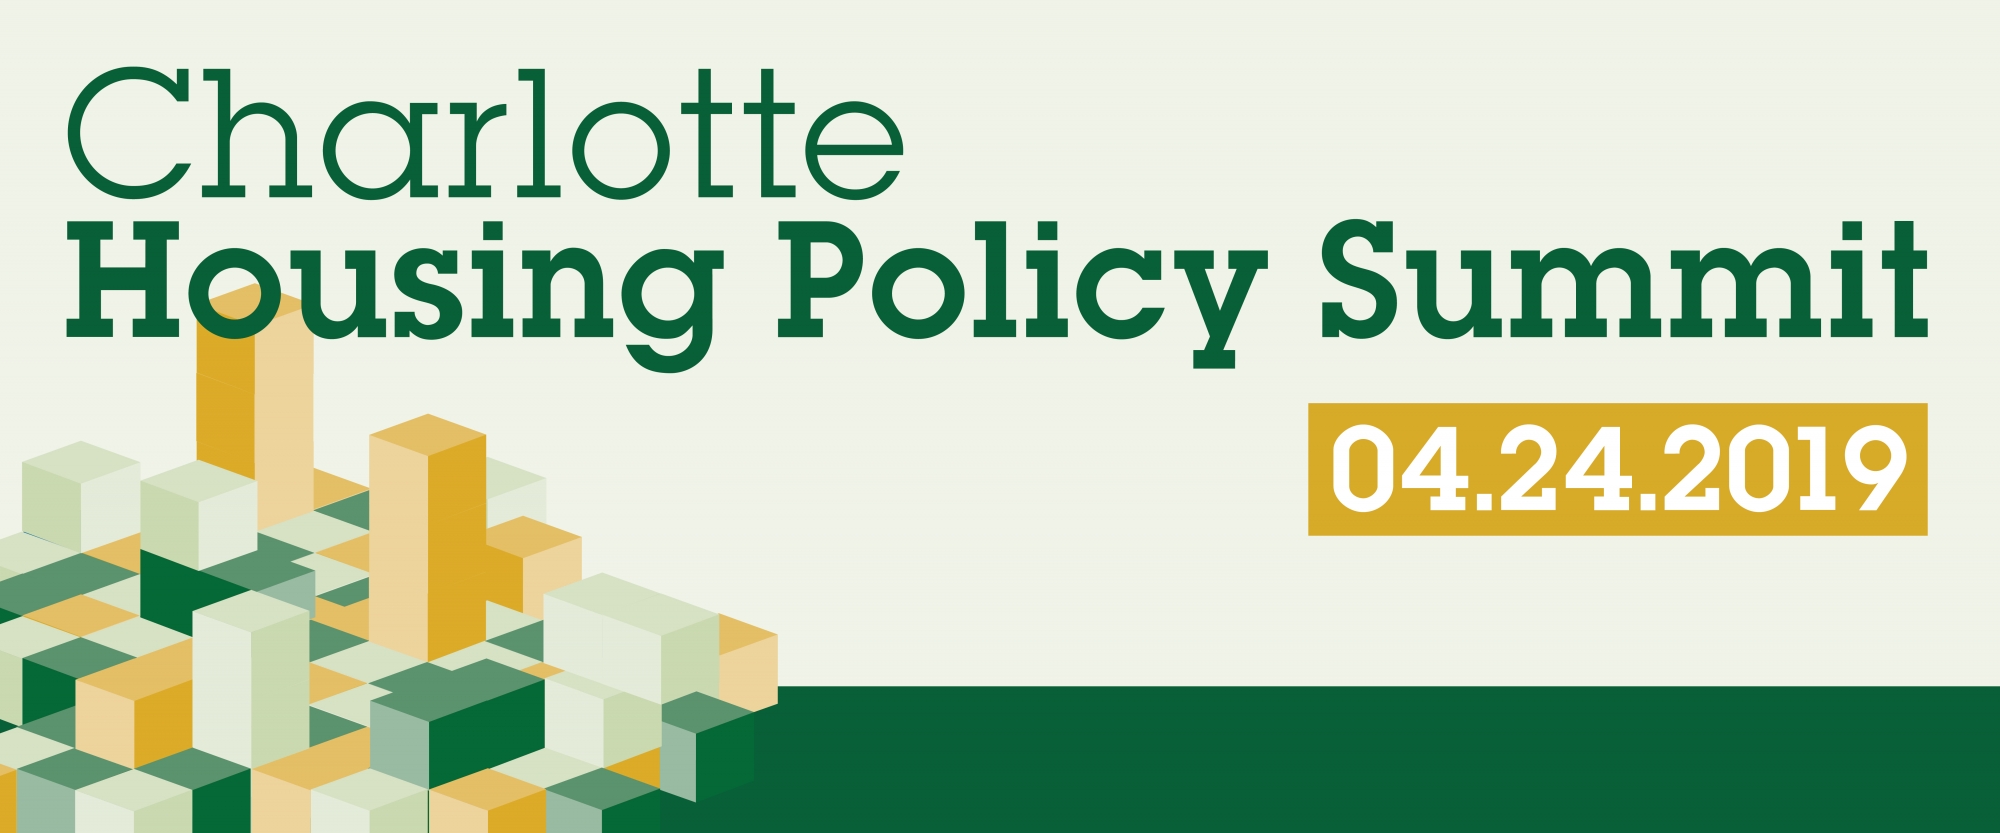 Charlotte Housing Policy Summit 042419